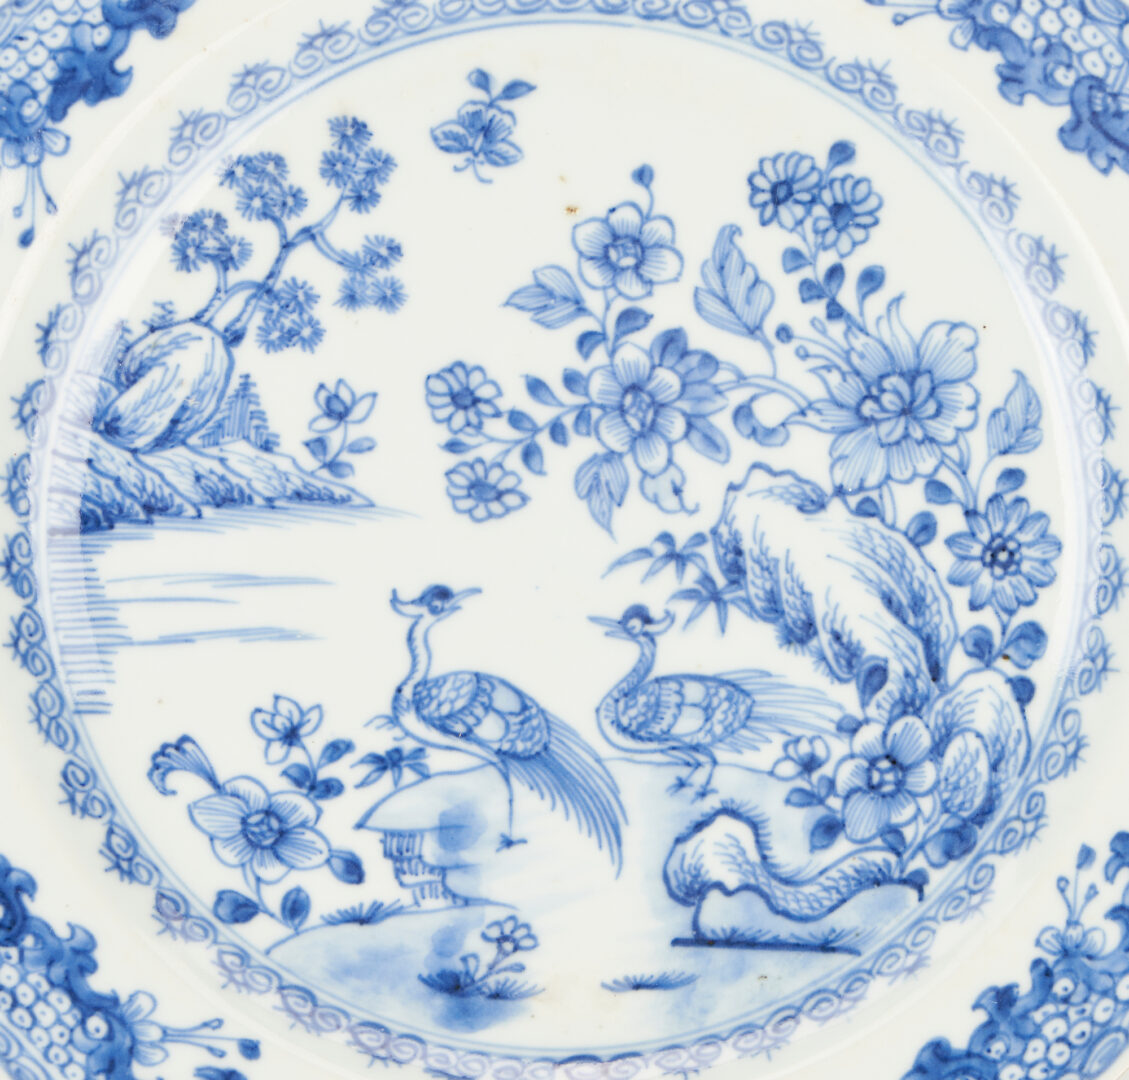 Lot 402: 10 Assembled Asian & English Porcelain Items